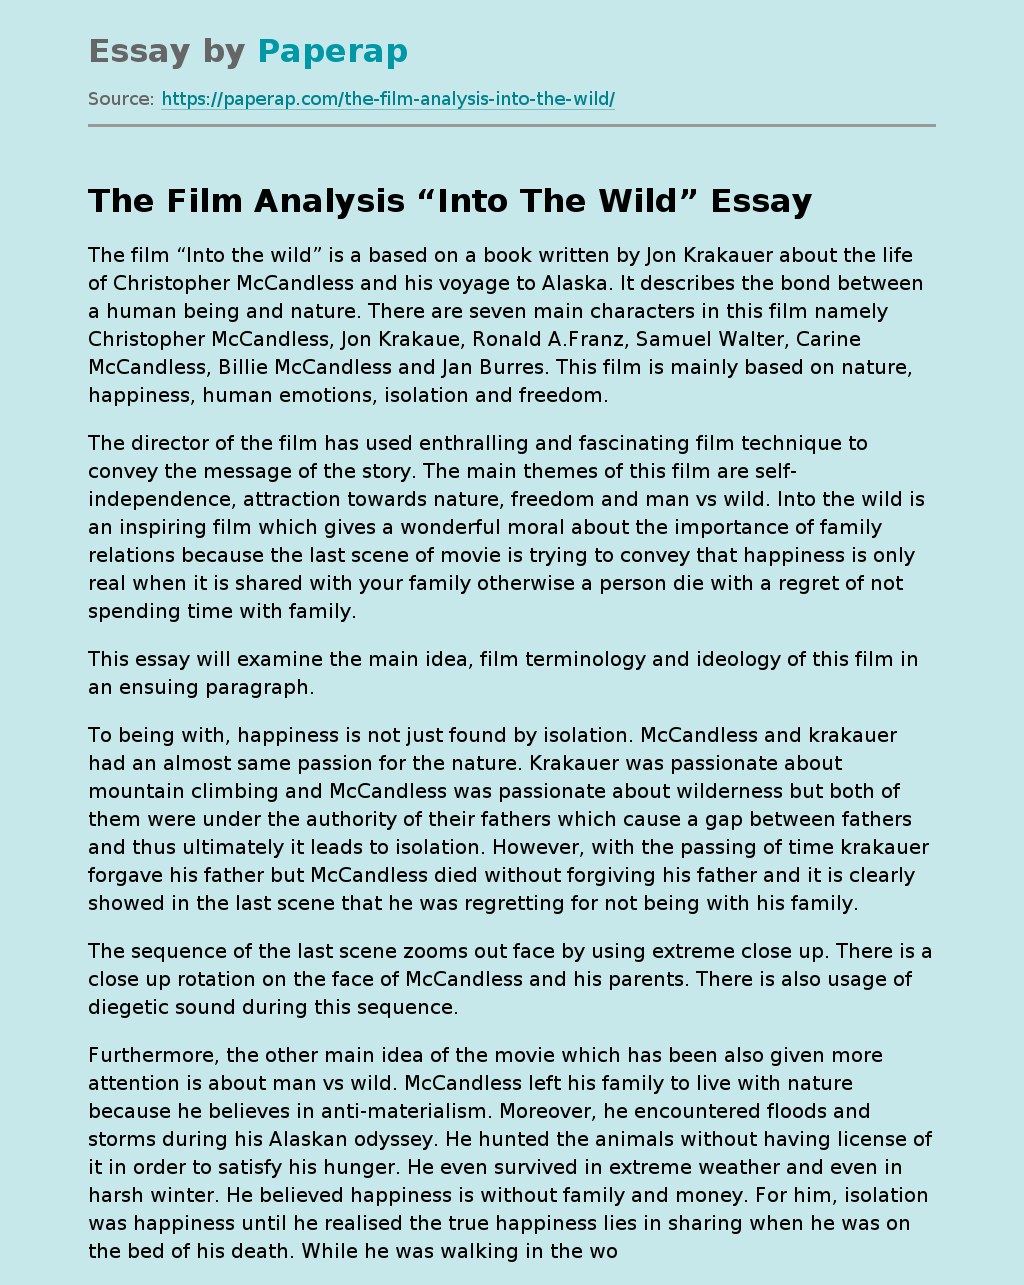 The Film Analysis “Into The Wild”